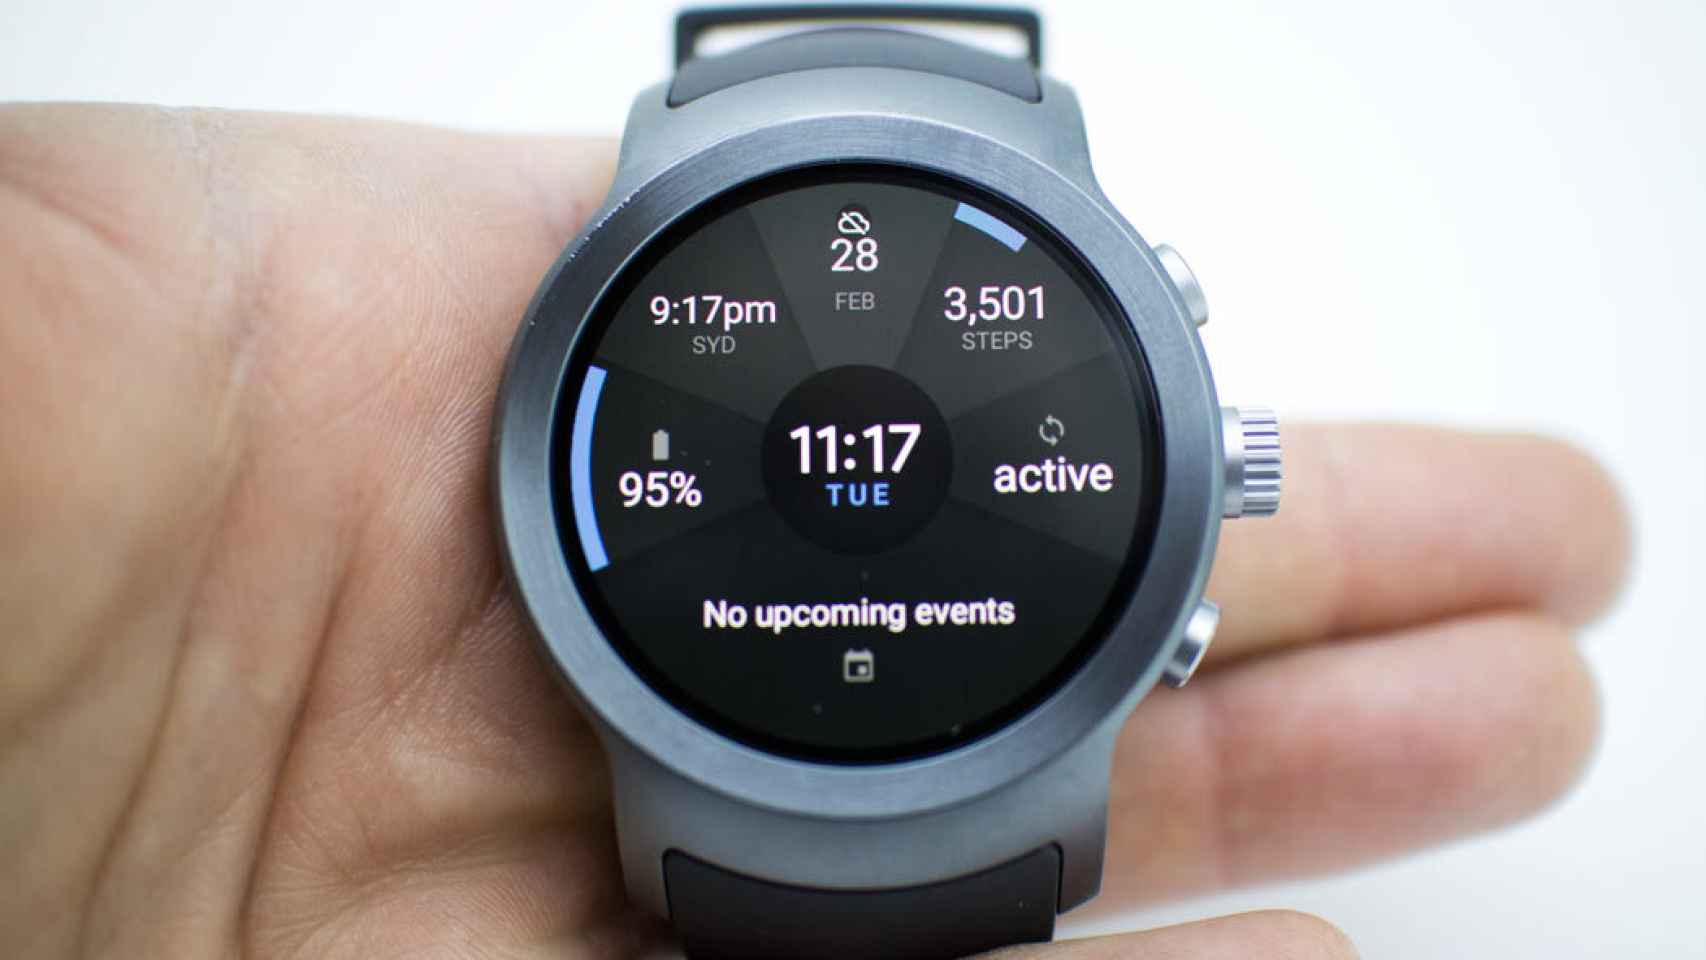 Смарт часы LG. Evolution LG watch. Циферблаты автомобильных марок на смарт часы LG. Часы g3 watch Sport. Watch sport обзор